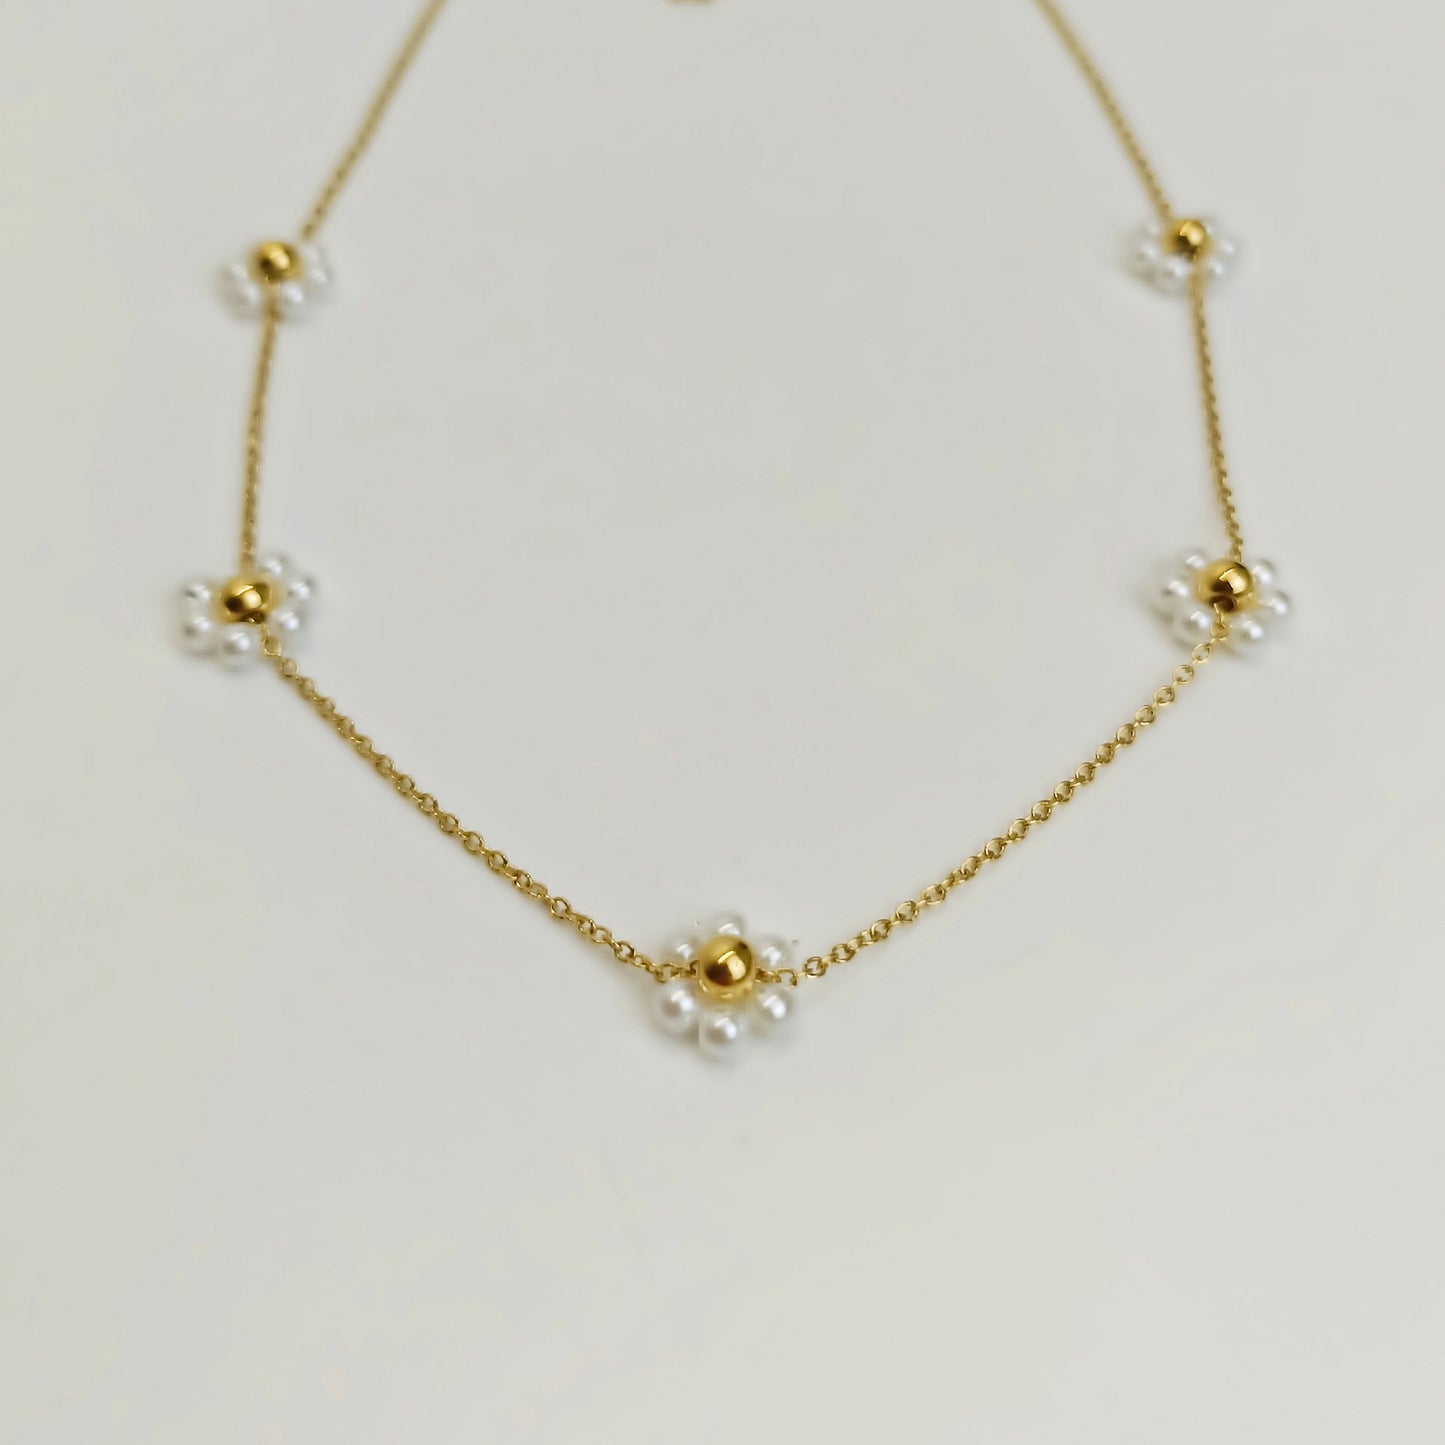 Carmen necklace